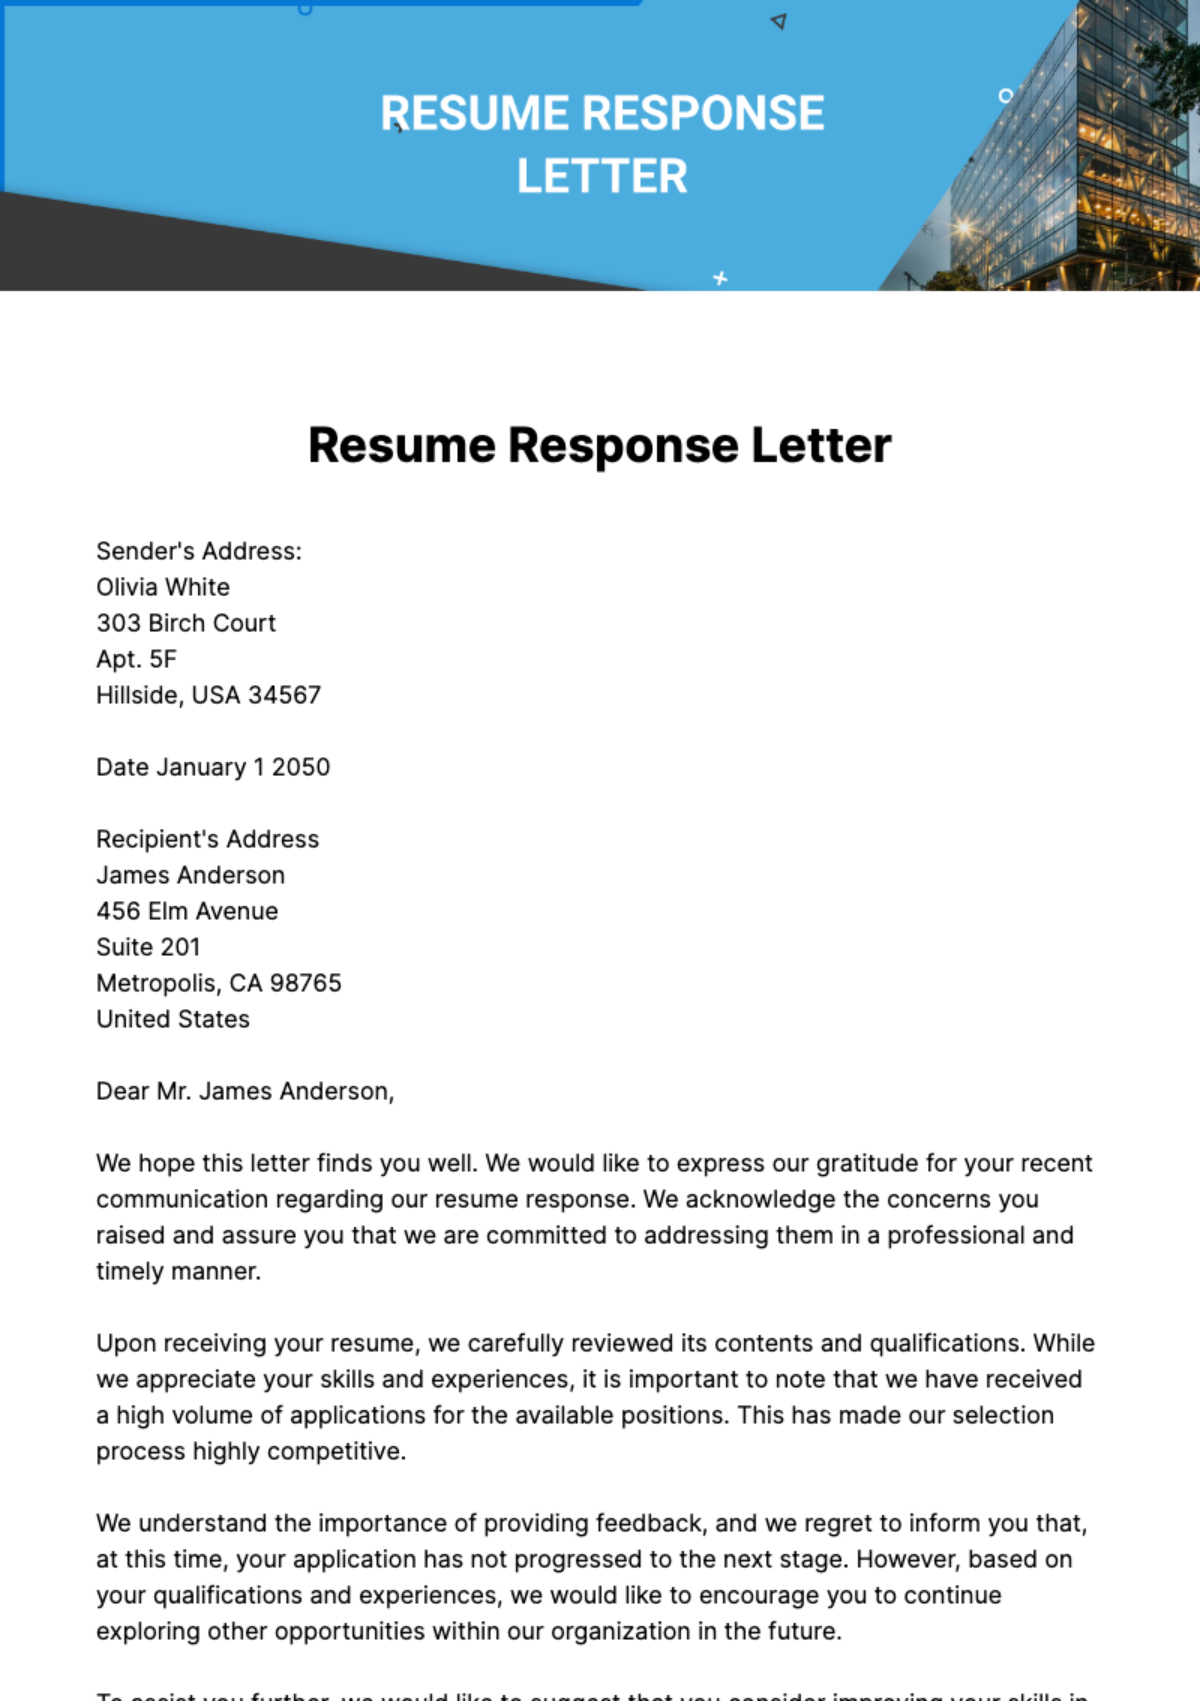 Free Resume Response Letter Template